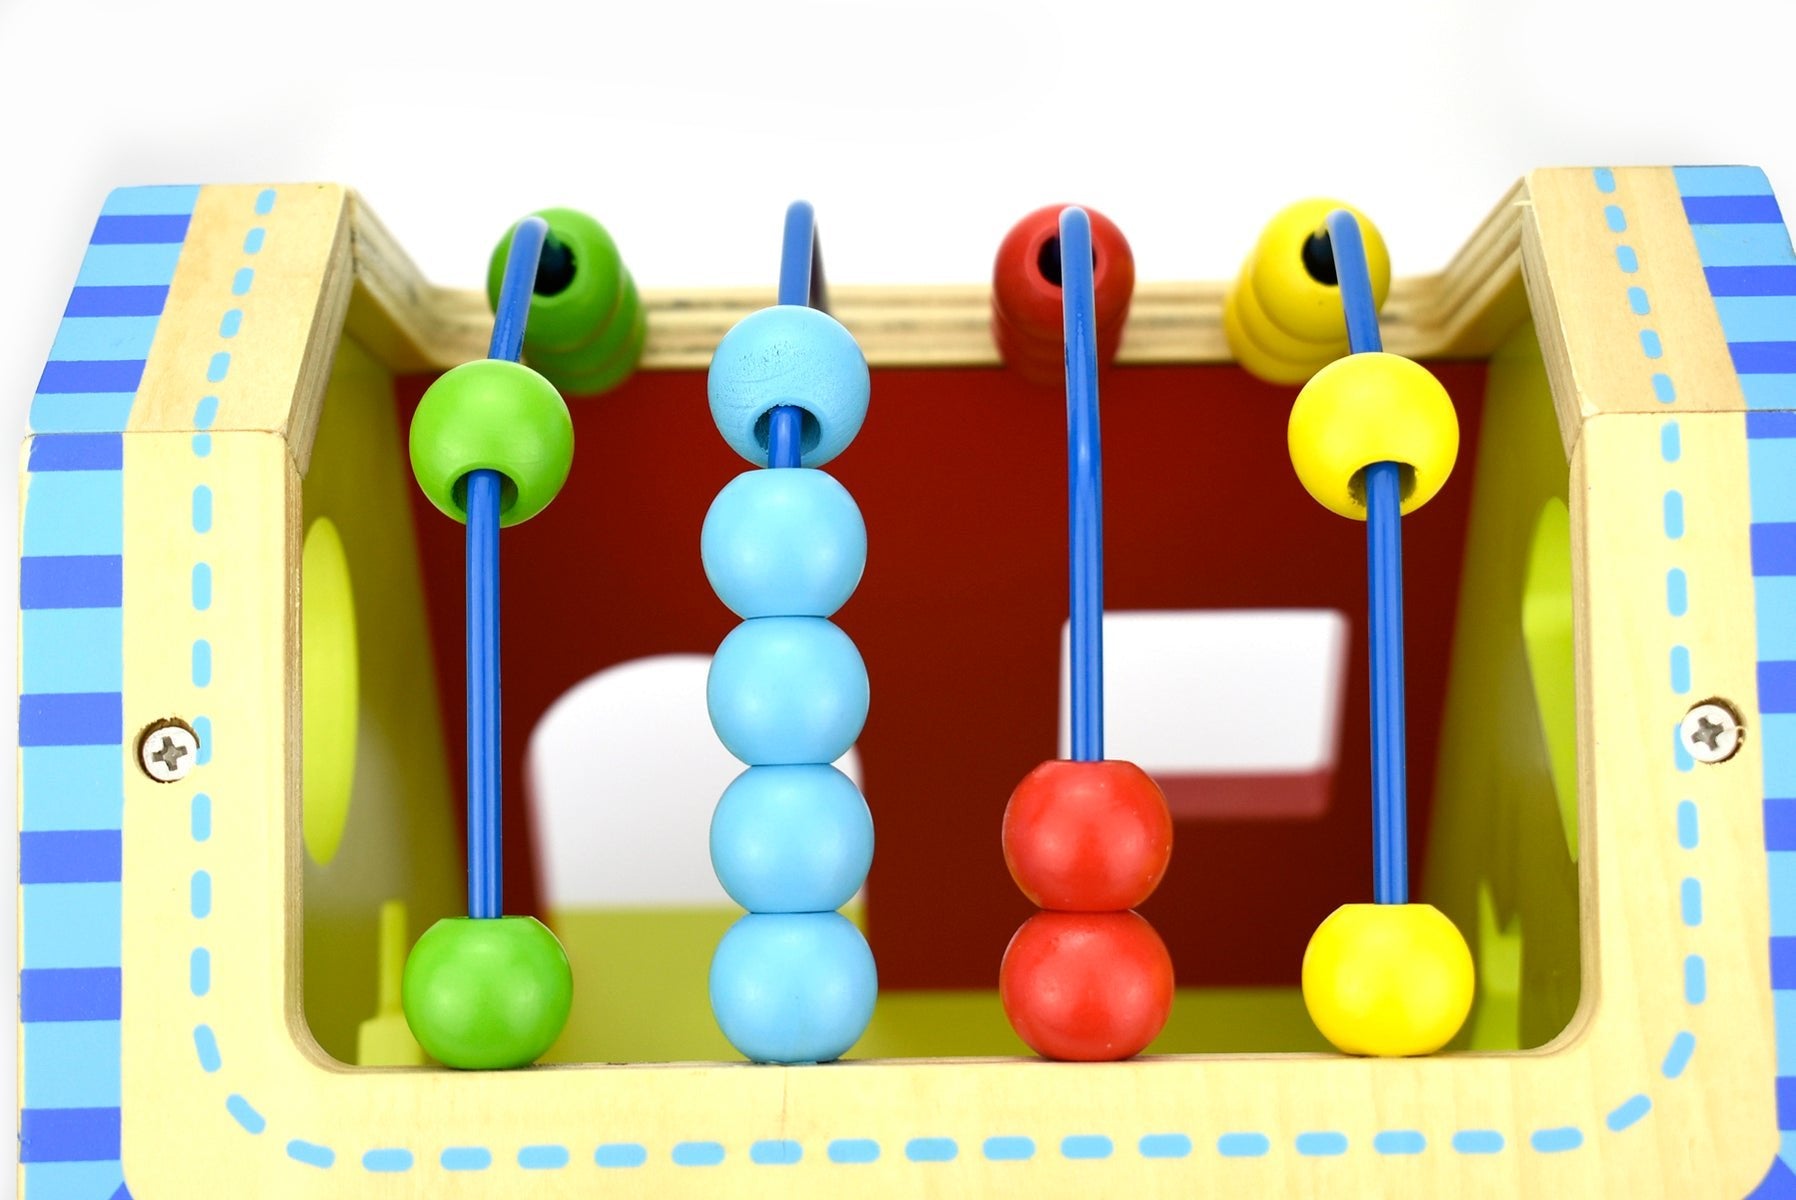 Wooden Block Toy Abacus Activity House - Kids Mega Mart